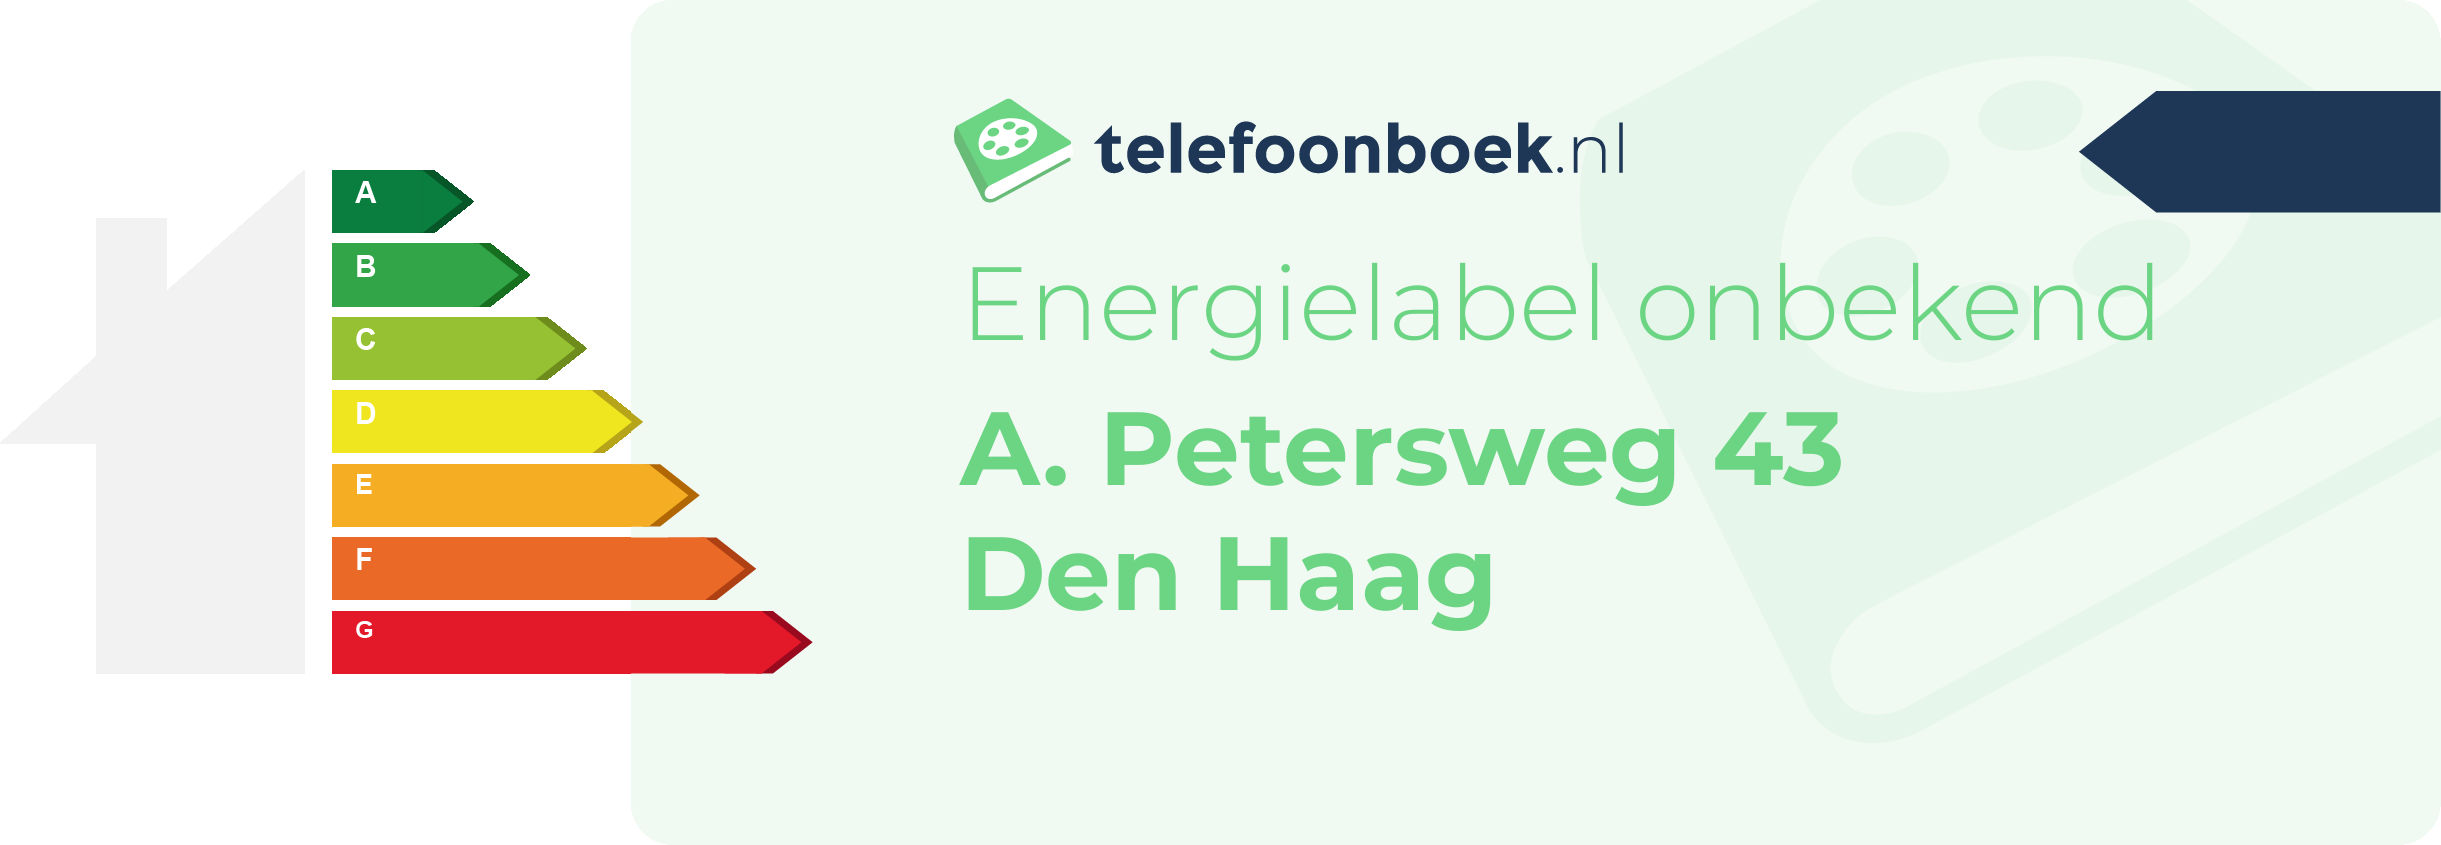 Energielabel A. Petersweg 43 Den Haag